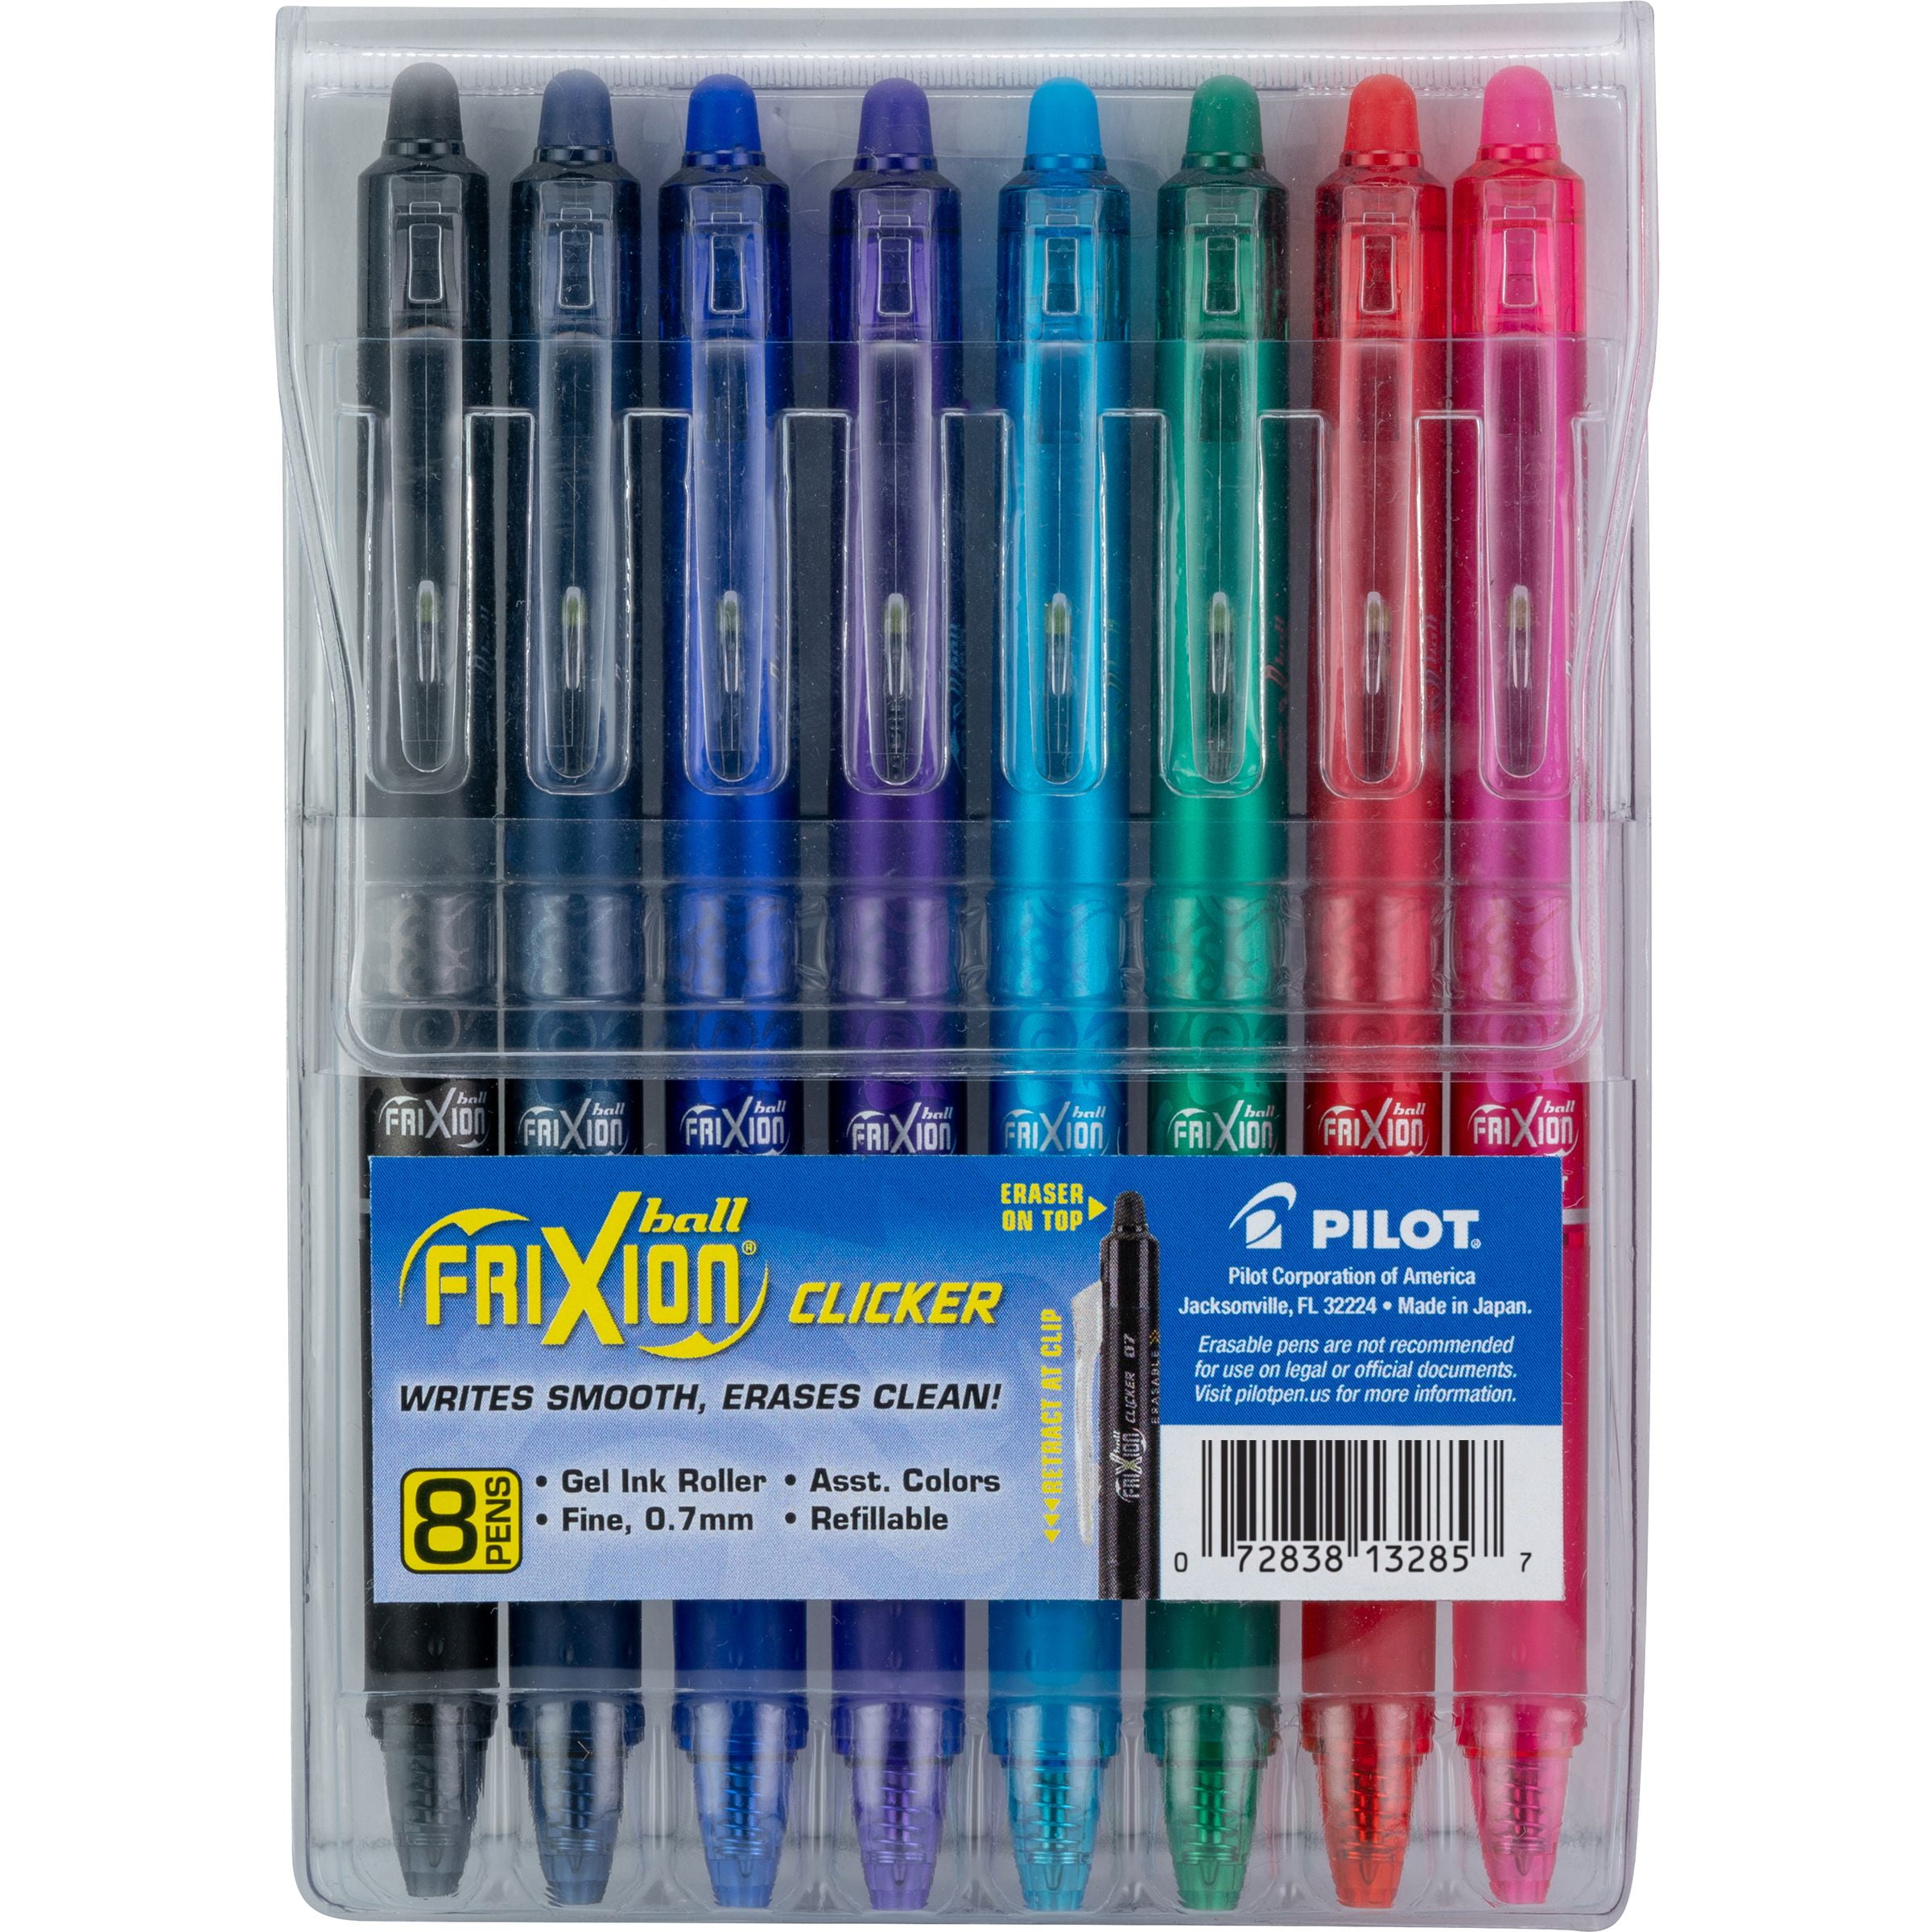 Omgeving mini slang Pilot Frixion Clicker Erasable Gel Ink Pens, Fine Point, Assorted Colors, 8  Pack Pouch - Walmart.com